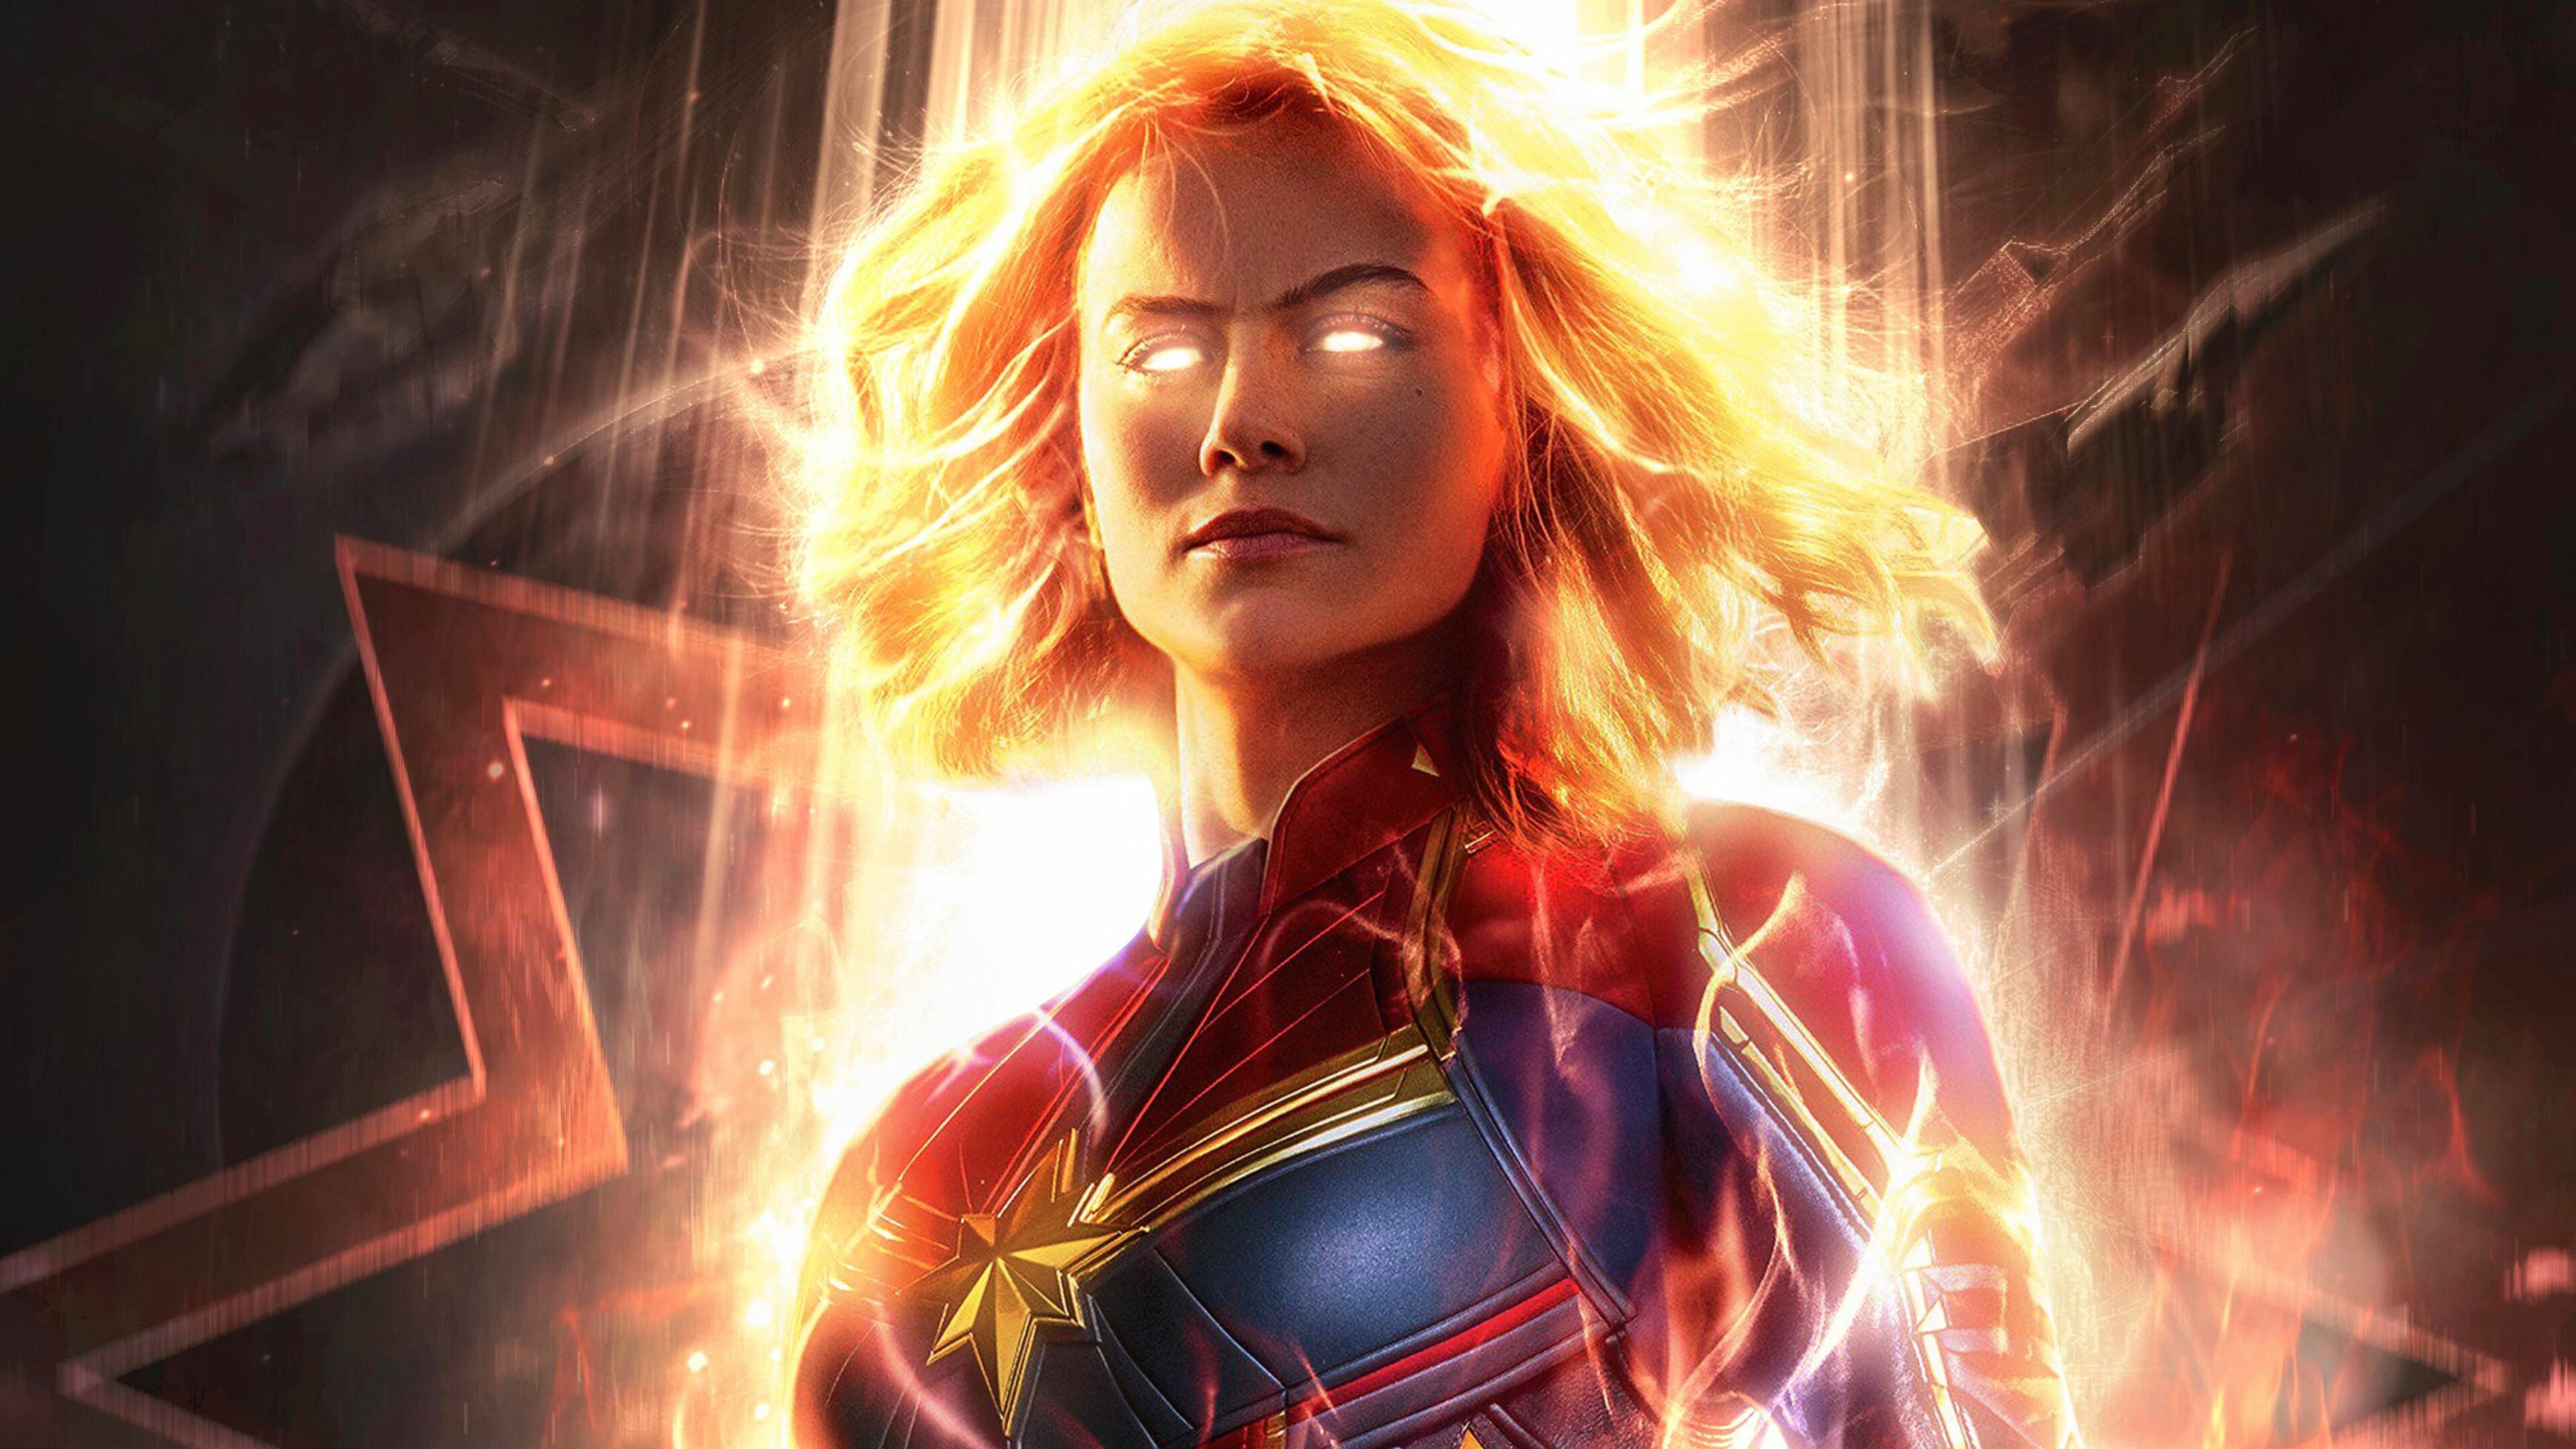 Marvel Girls: Captain Marvel, 2019 movie, Carol Danvers portrayed by Brie Larson, Comics. 3840x2160 4K Wallpaper.